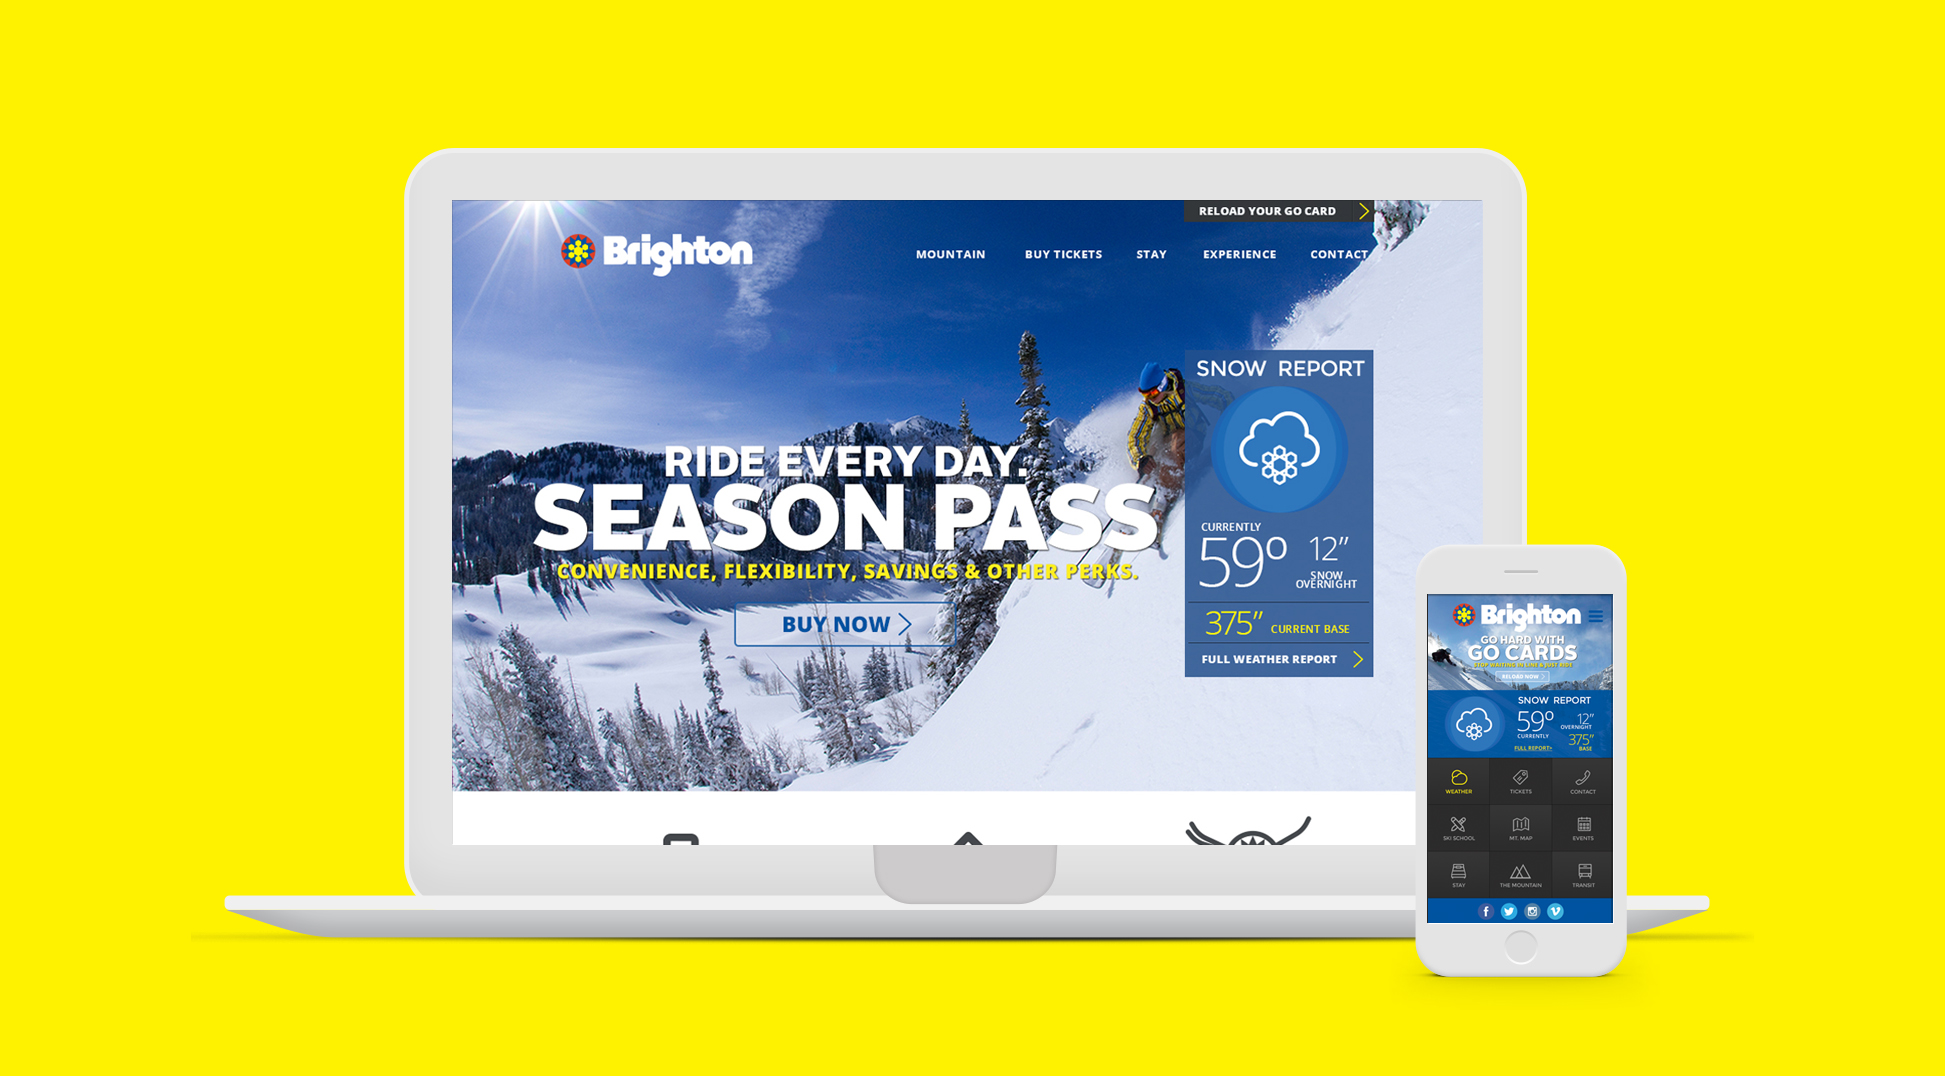 Brighton Ski Resort website on laptop and phone screen